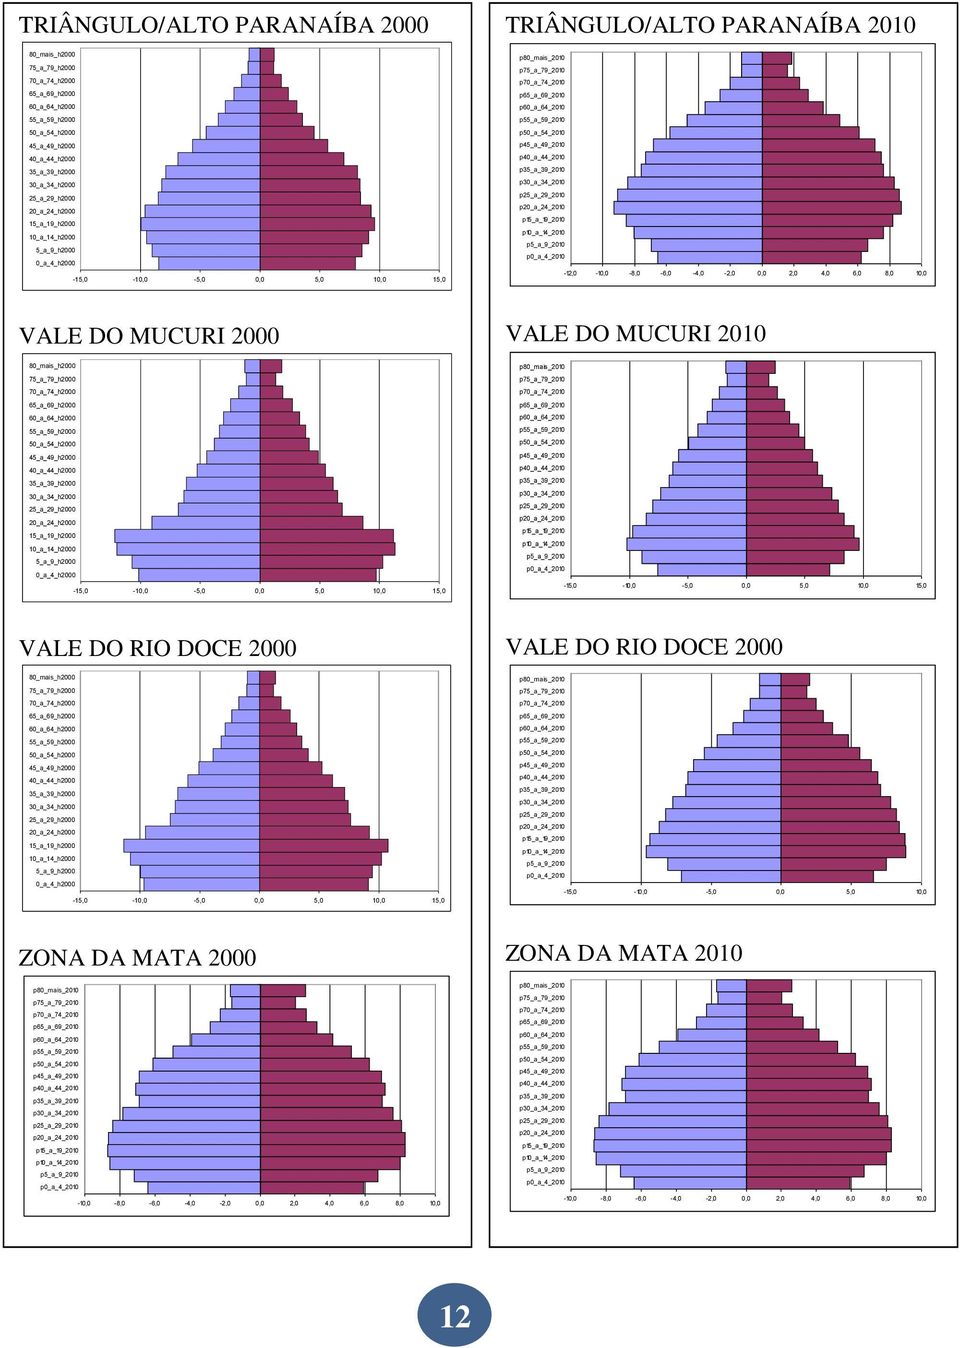 VALE DO RIO DOCE 2000-15,0-10,0-5,0 0,0 5,0 10,0 ZONA DA MATA 2000-10,0-8,0-6,0-4,0-2,0